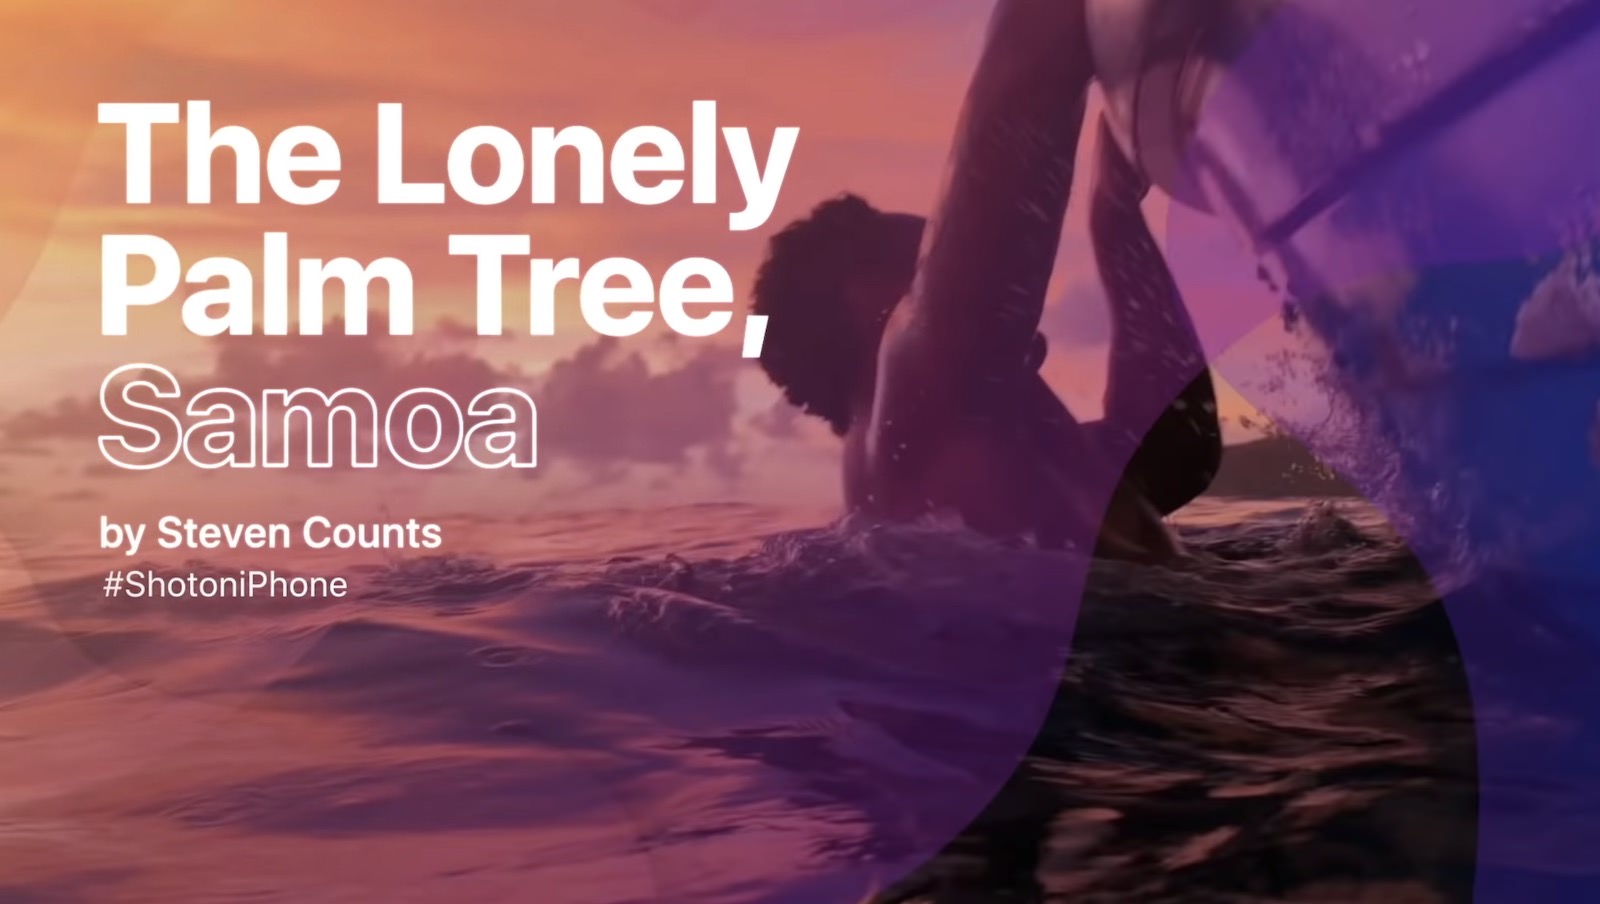 Shot-on-iphone-the-lonely-palm-tree-samoa.jpg